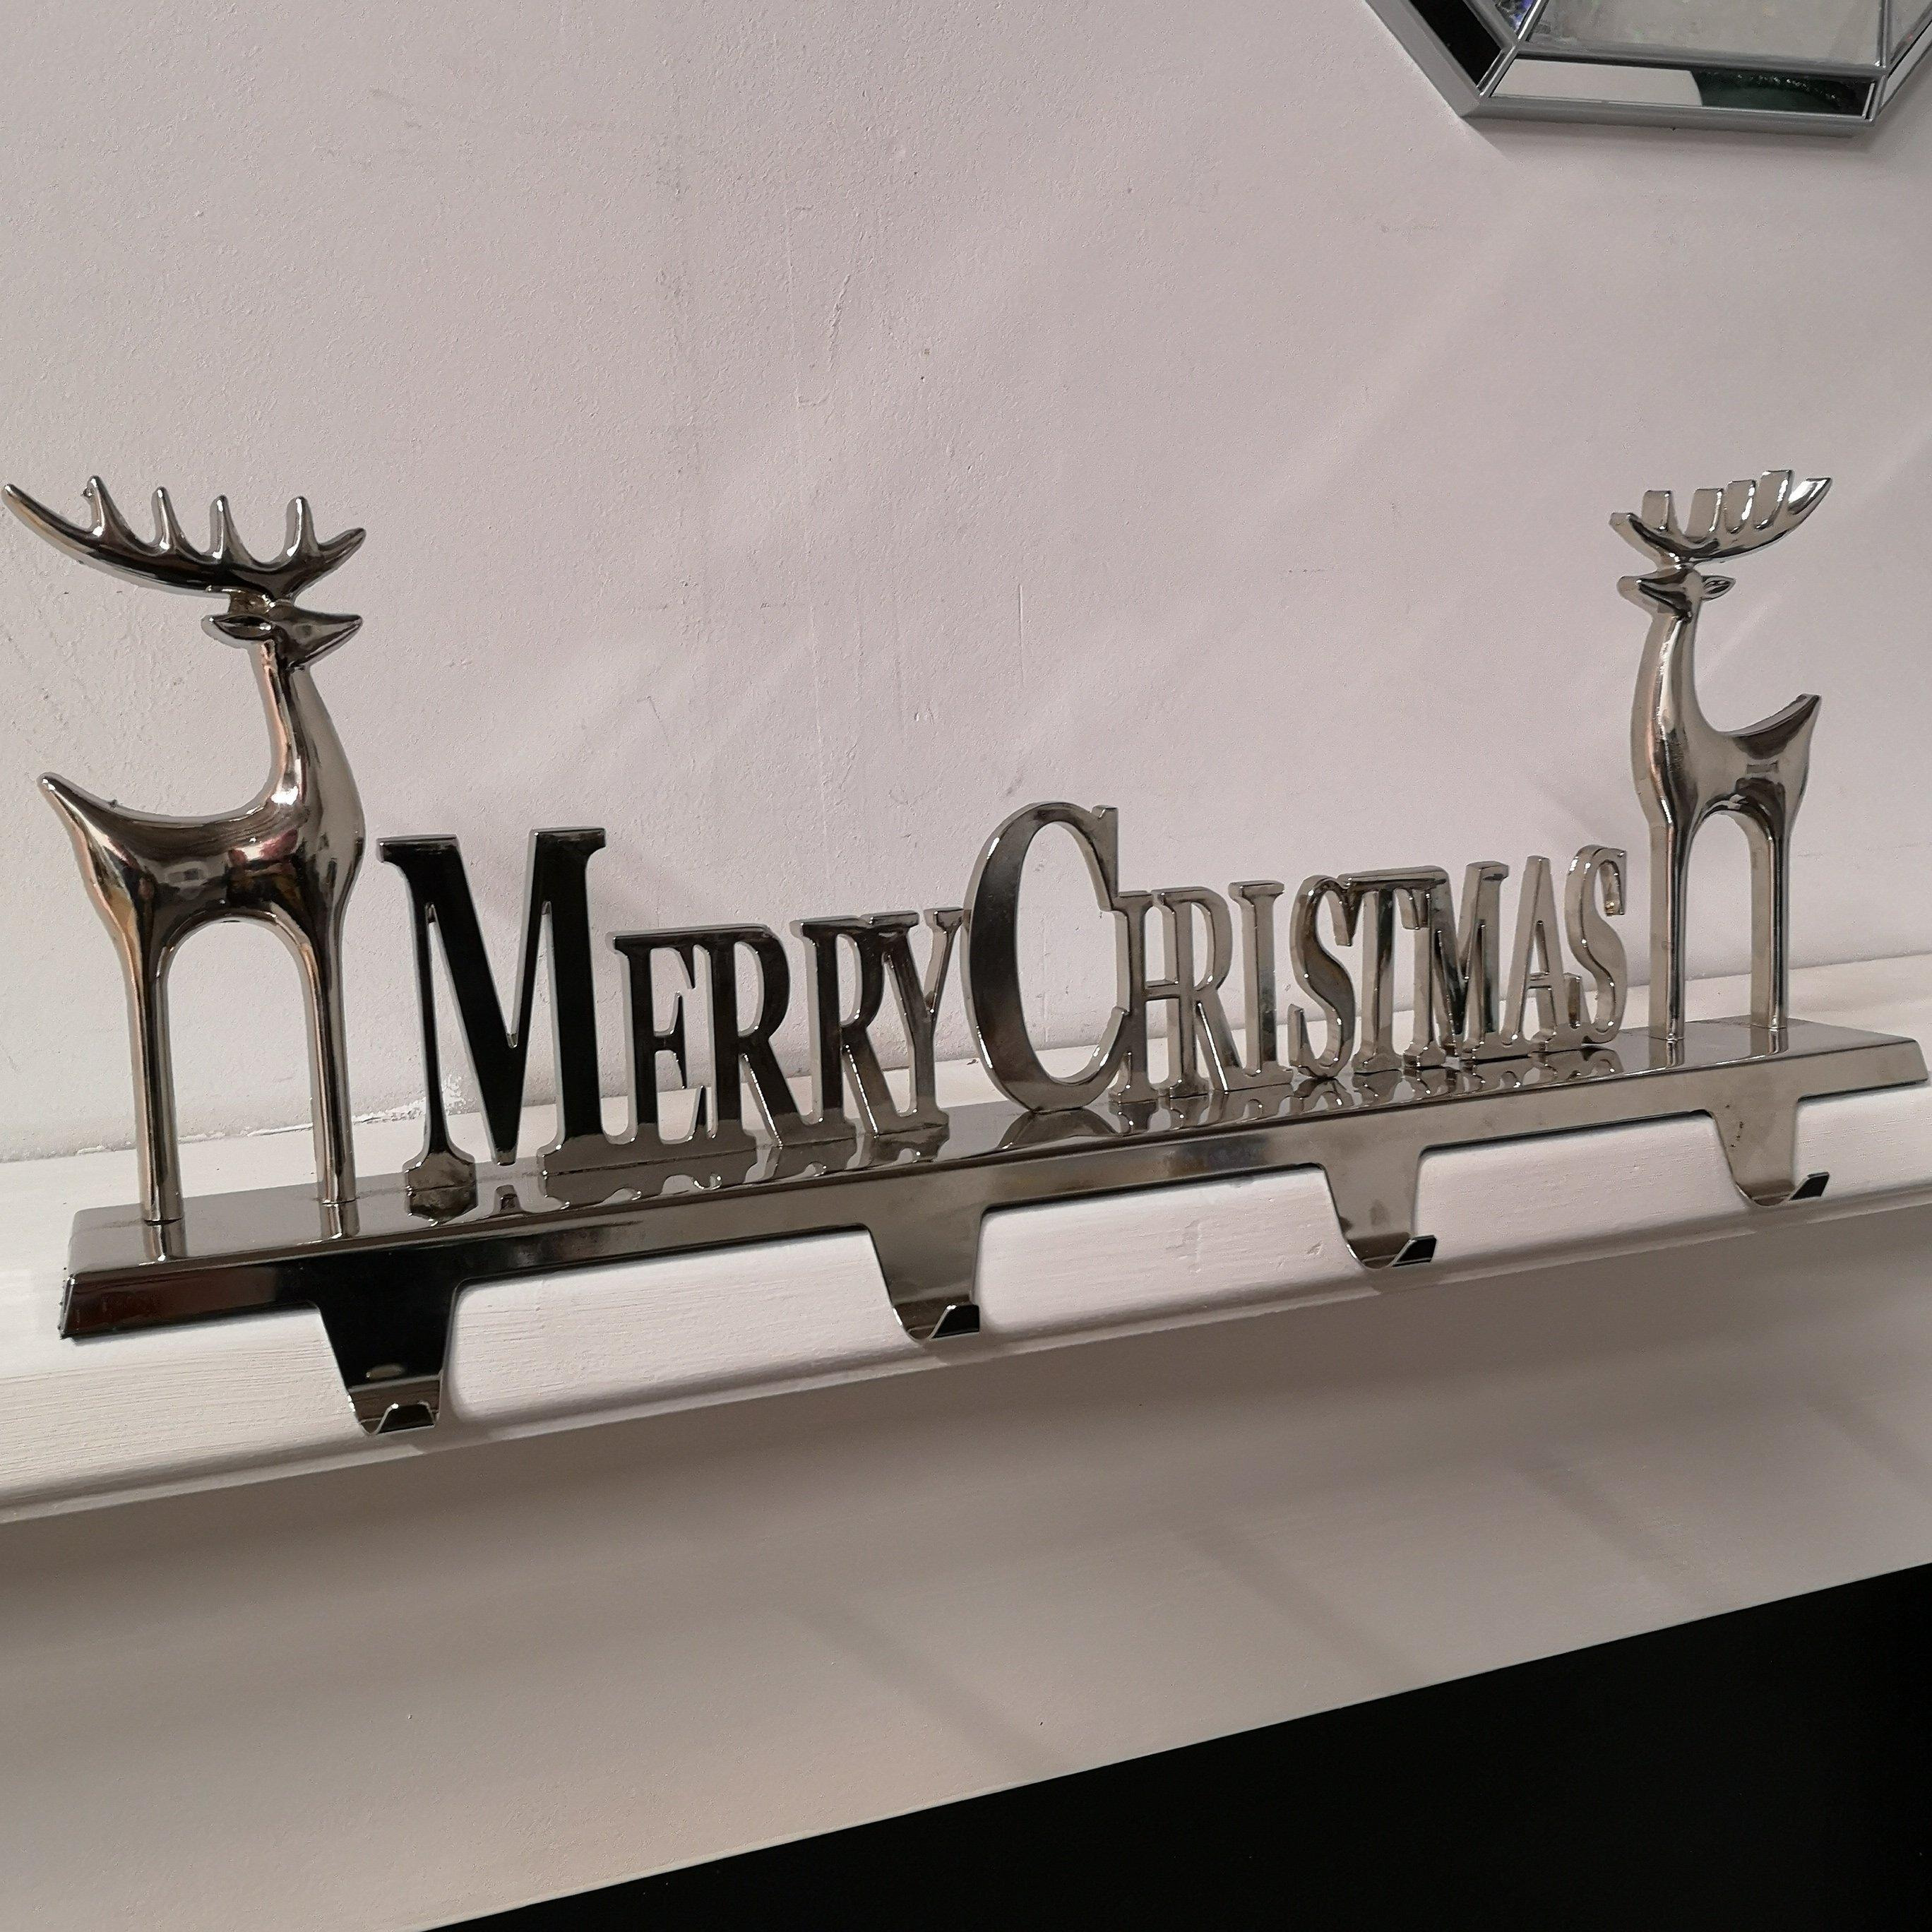 50cm x 18cm Silver Premier Decorative Merry Christmas Stocking Hanger, Hangs 4 Stockings - image 1